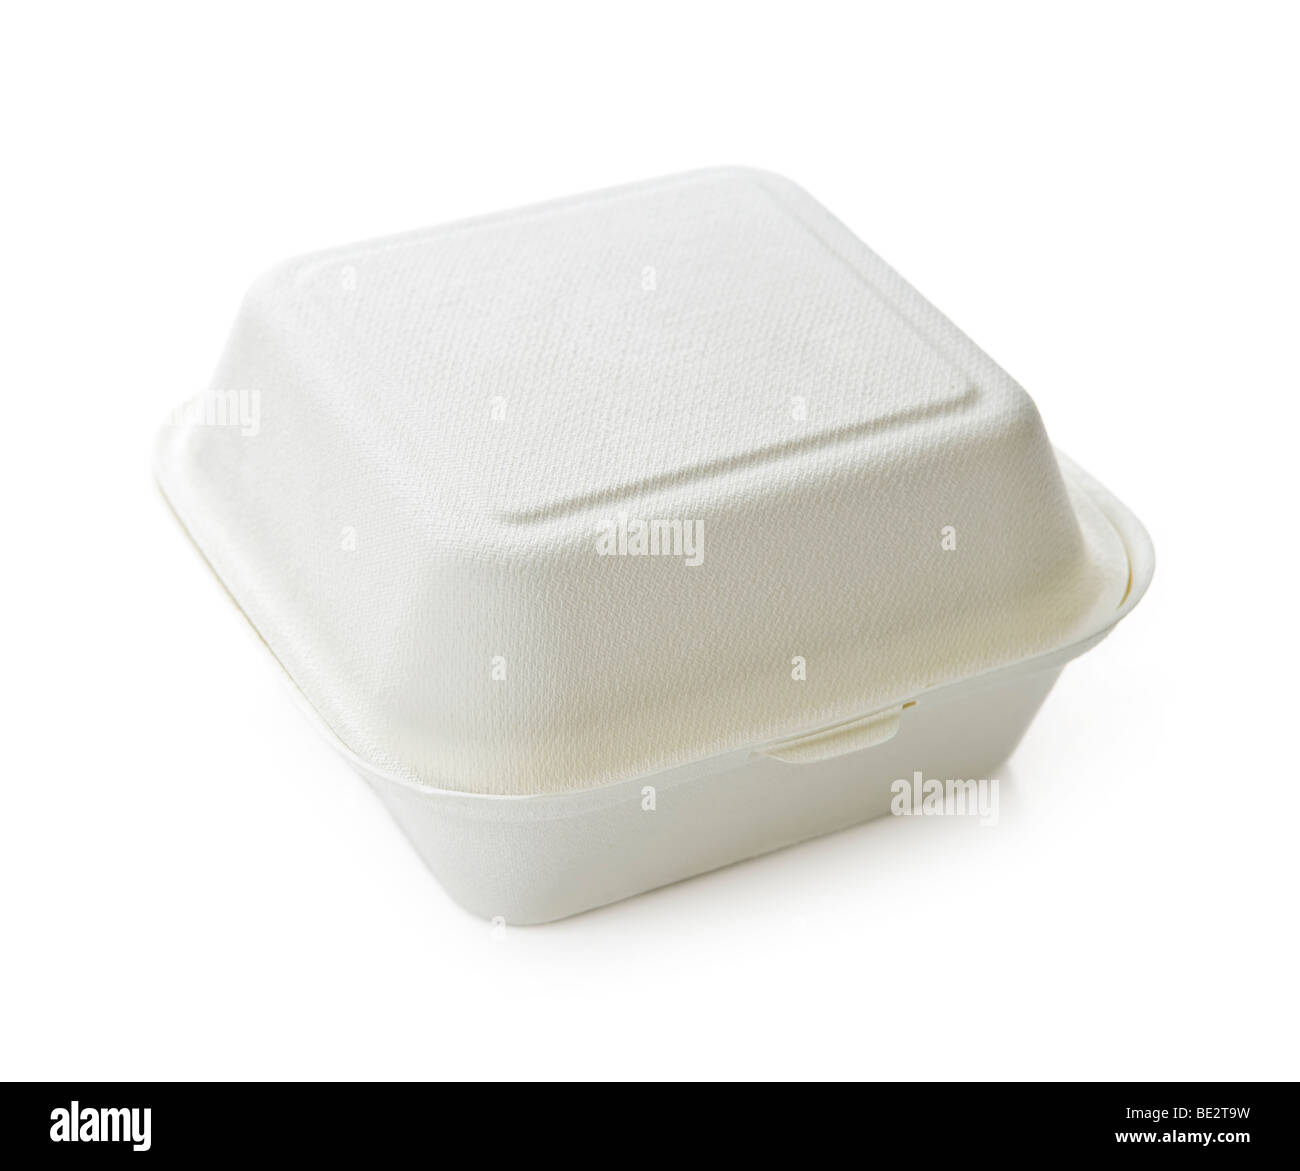 Imagen aislada de sacar contenedores desechables Foto de stock